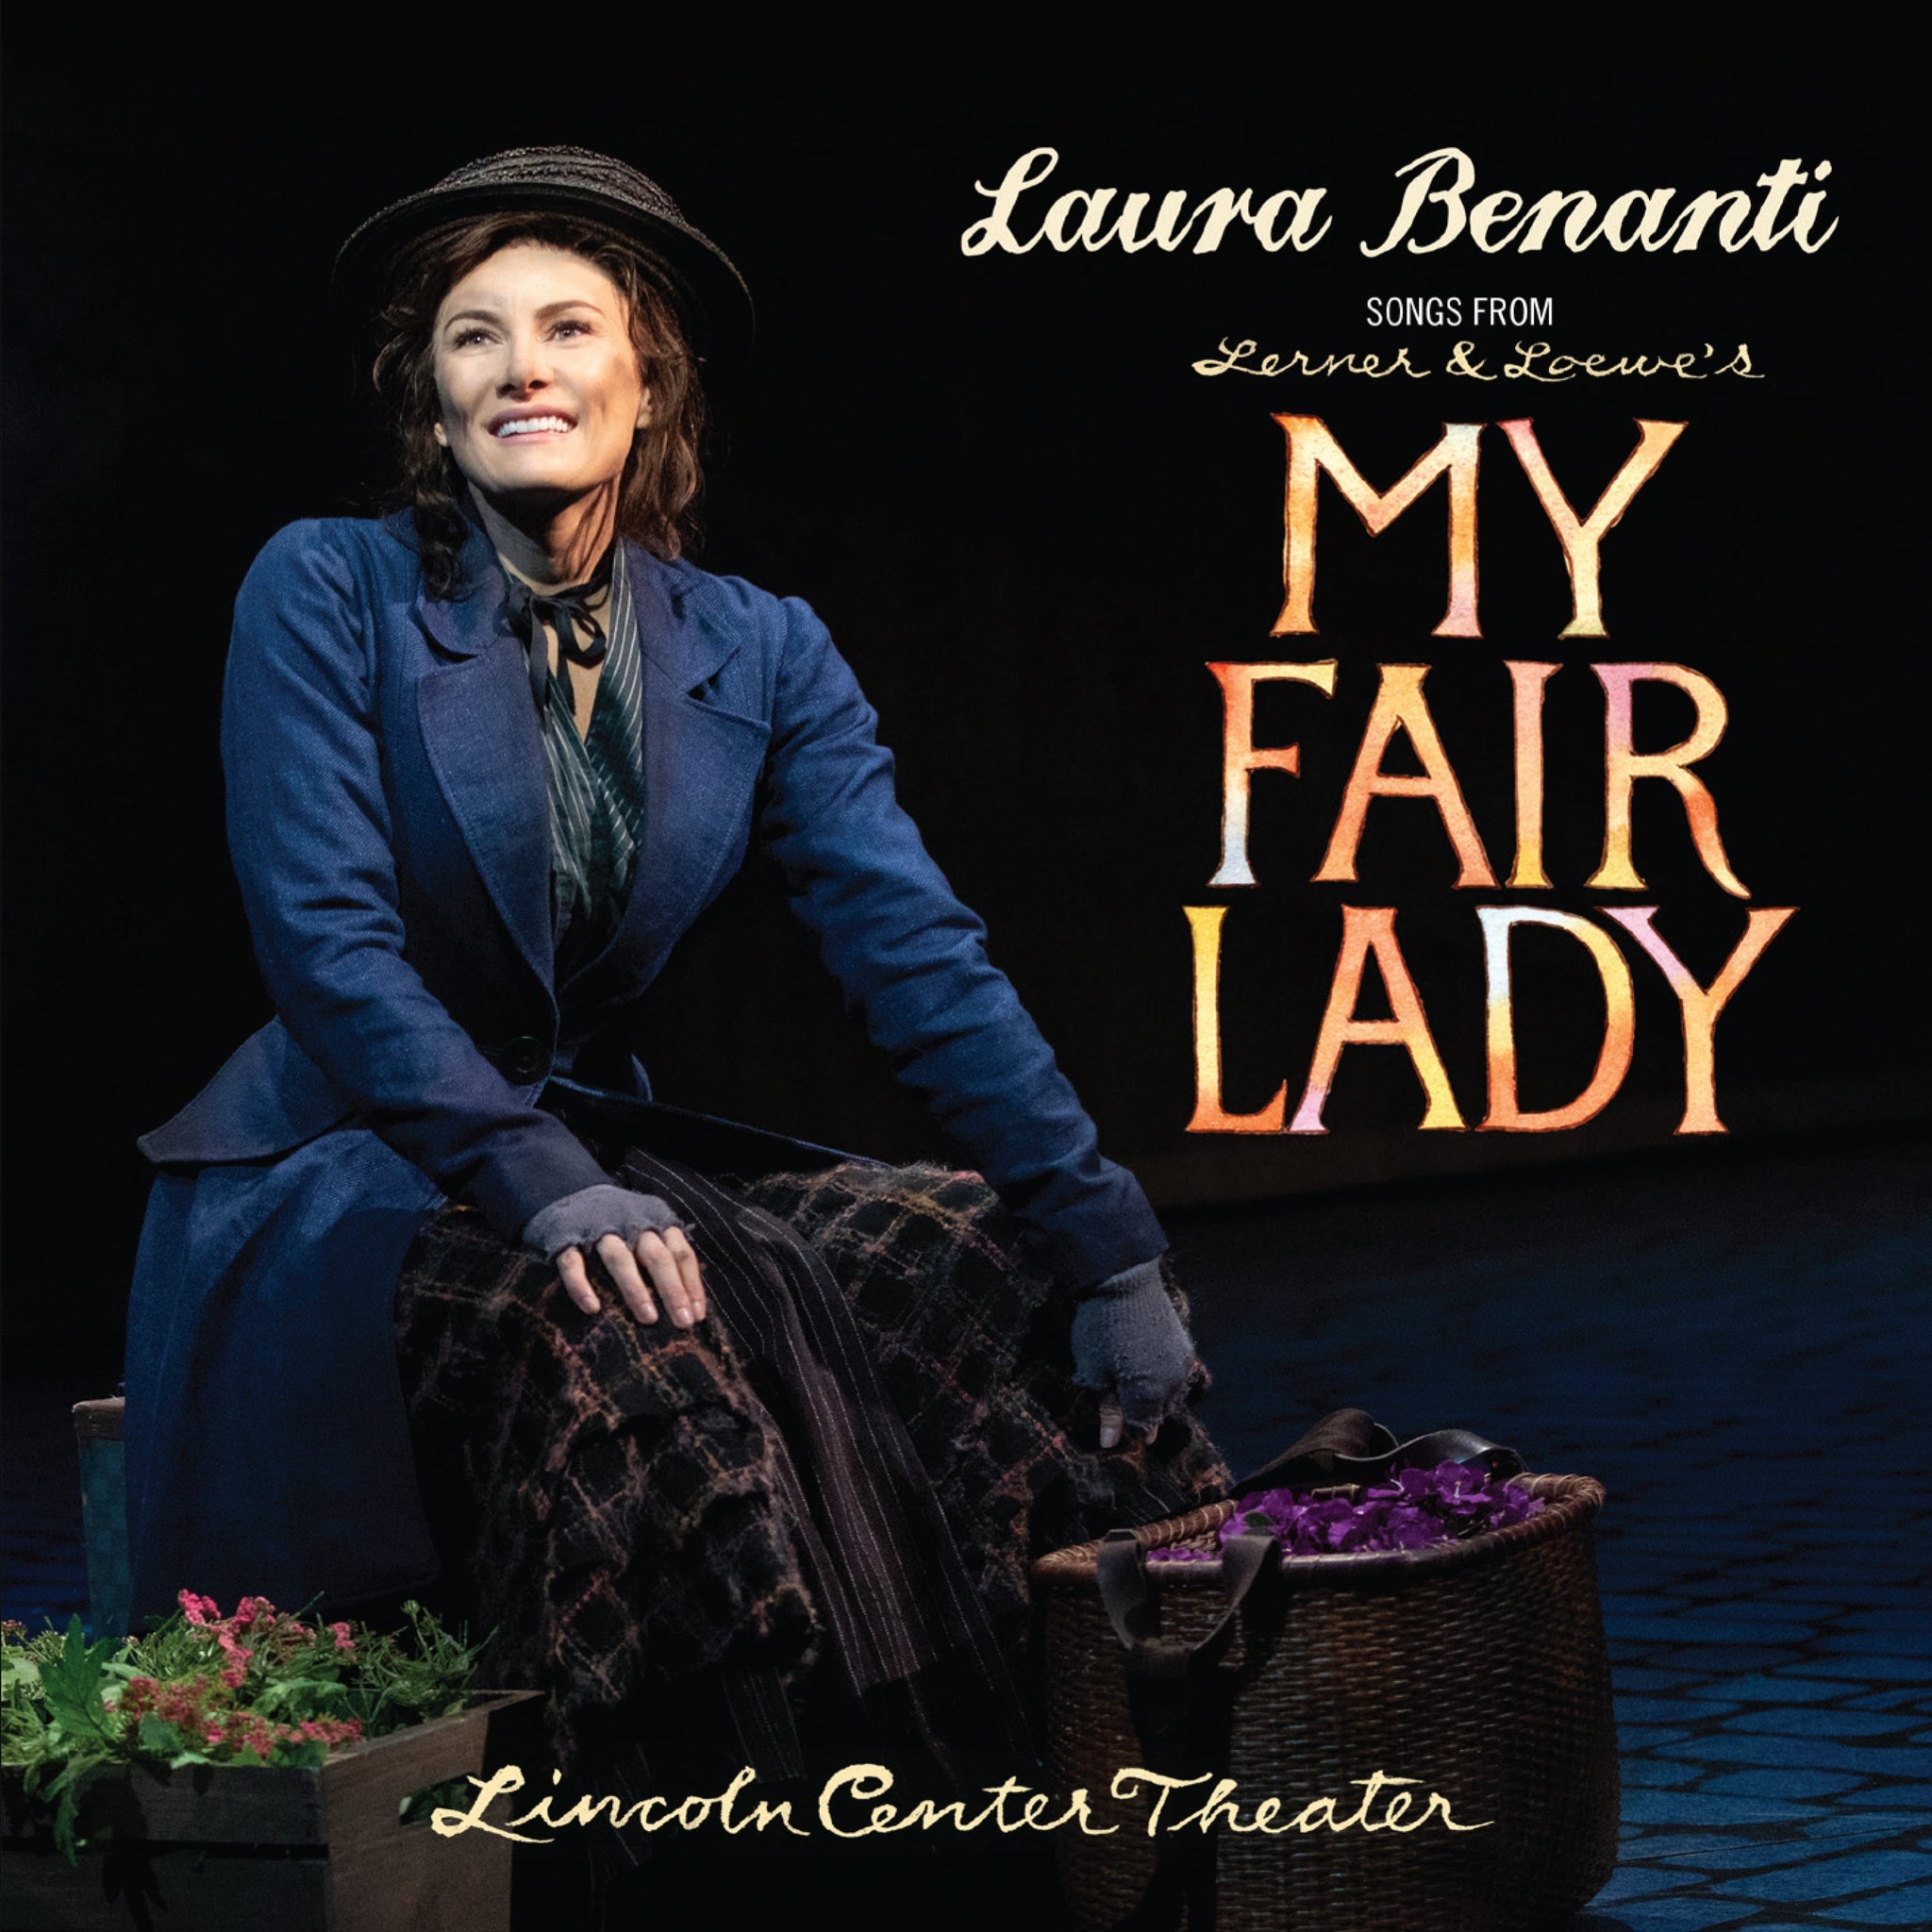 Laura Benanti - Songs from My Fair Lady [MP3]